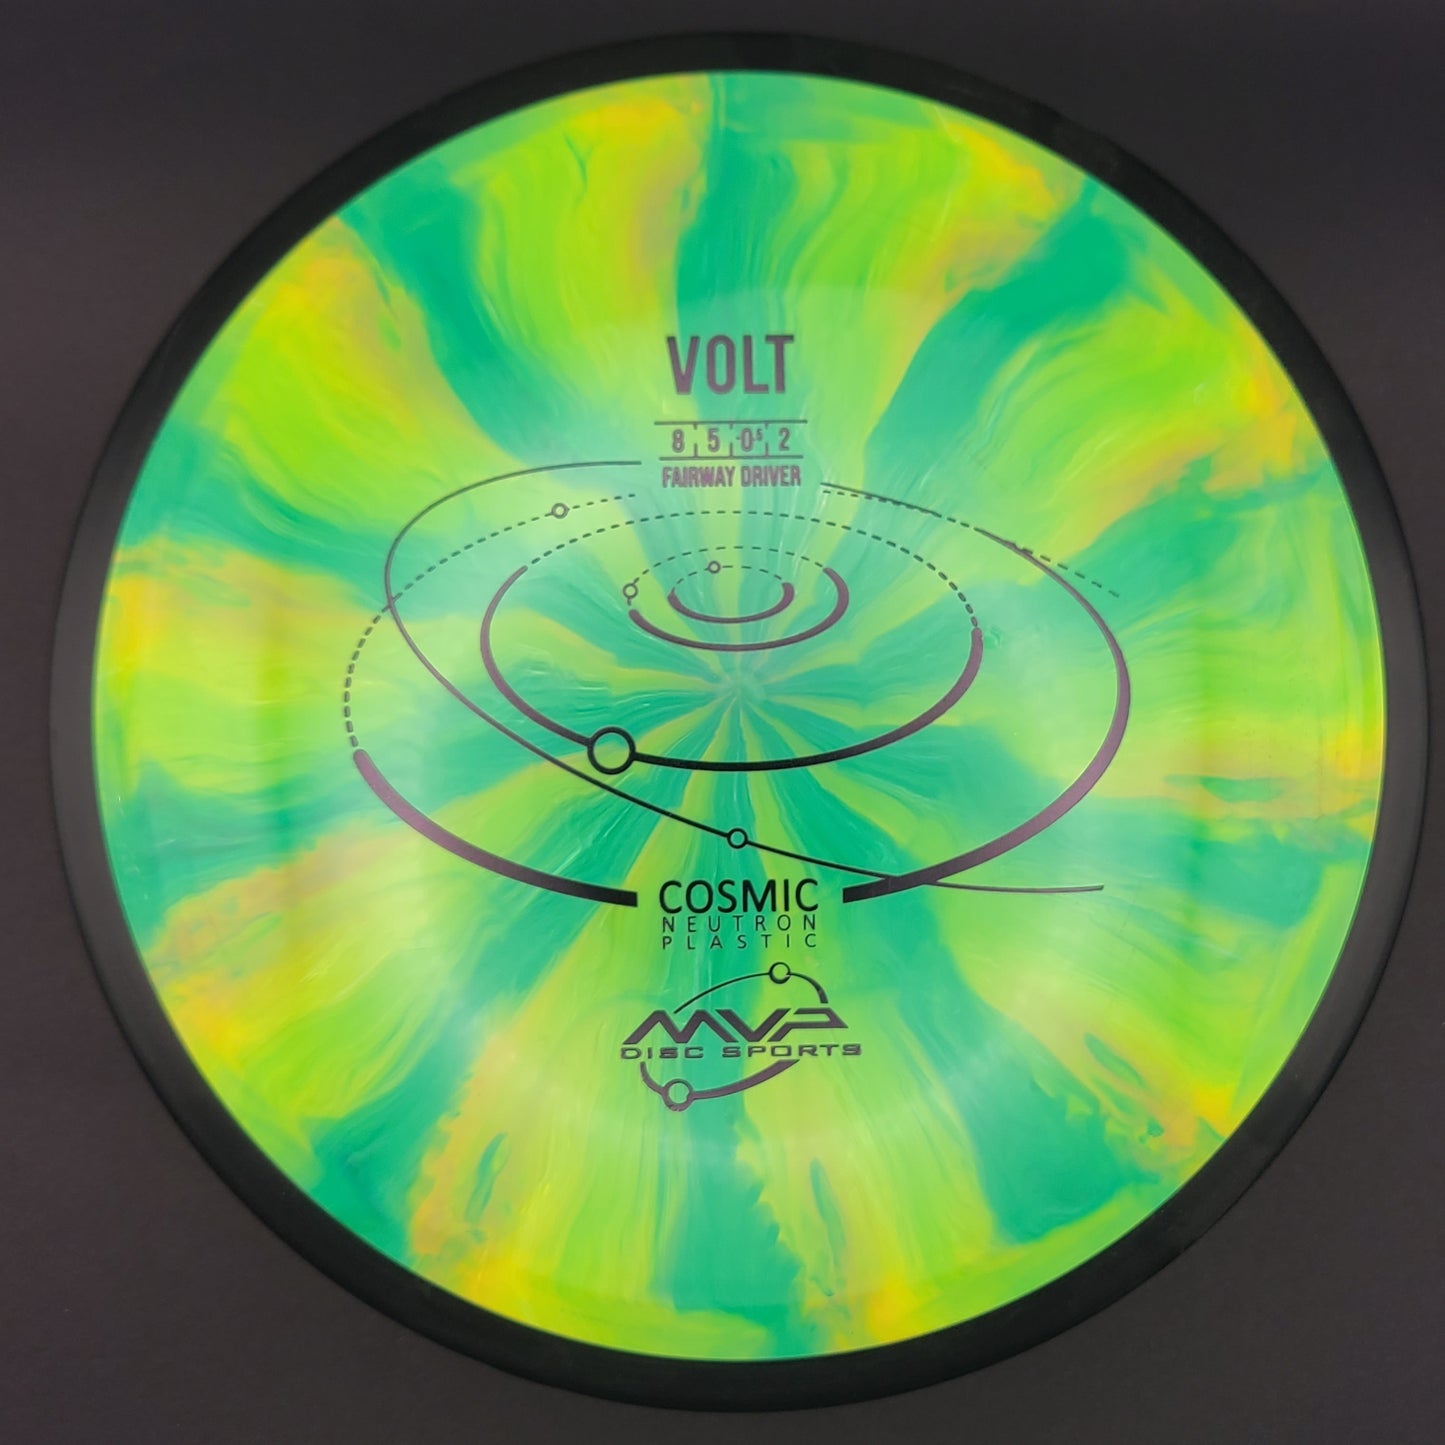 MVP - Volt - Cosmic Neutron